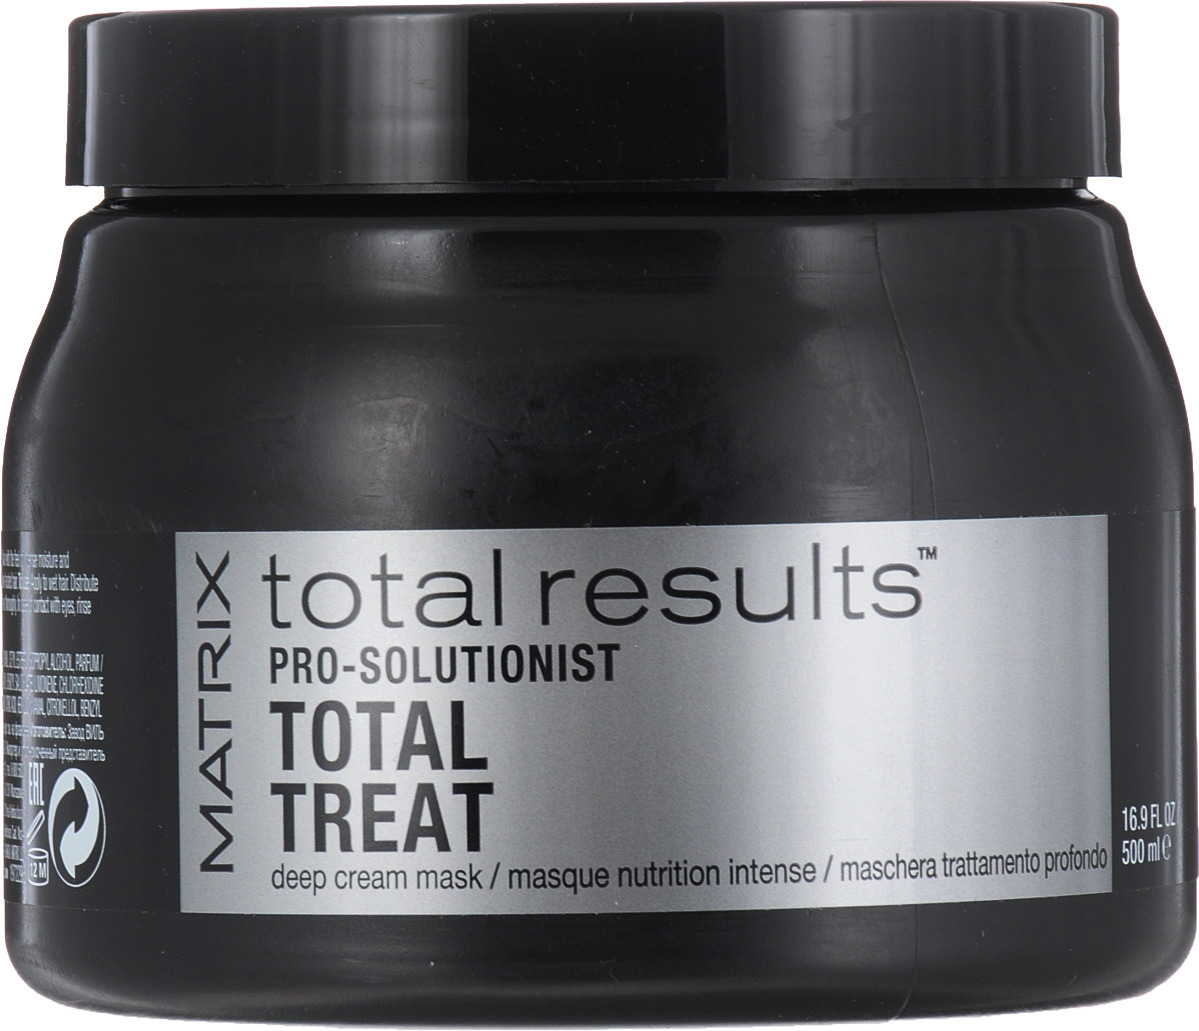 Matrix total results pro solutionist instacure несмываемый уход за волосами